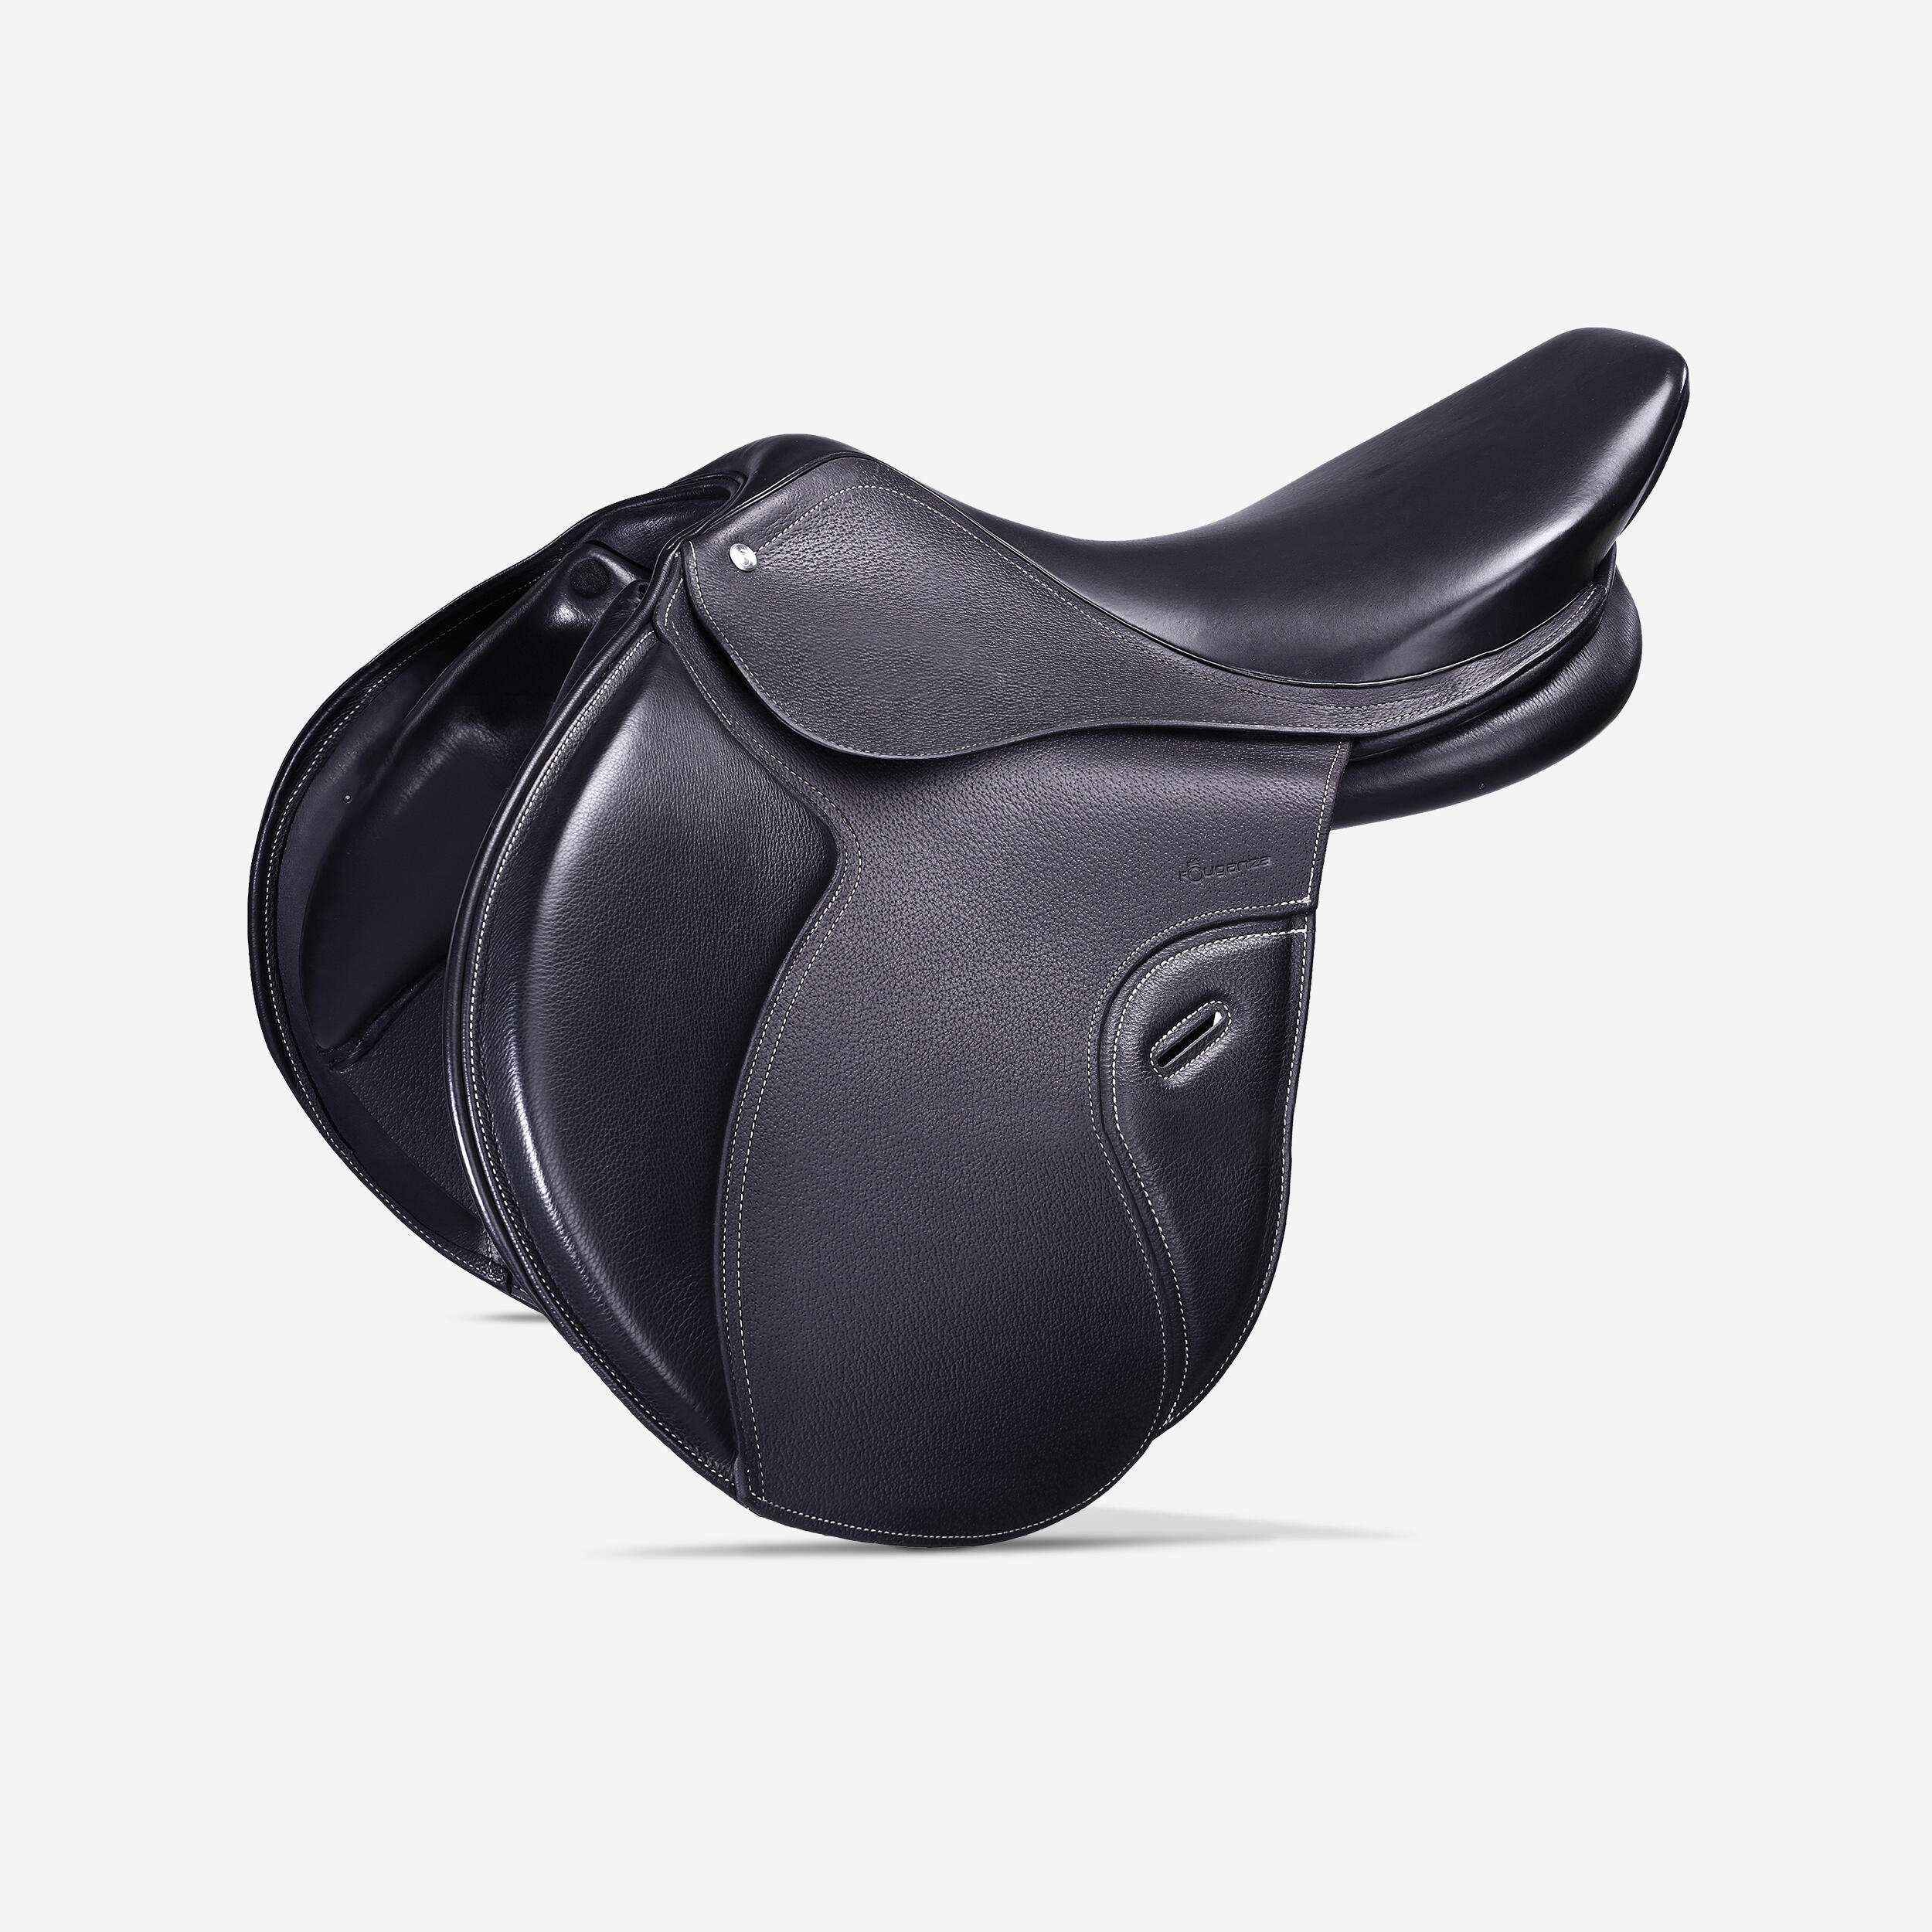 17.5" Versatile Leather Horse Riding Saddle for Horse Paddock - Black 1/16